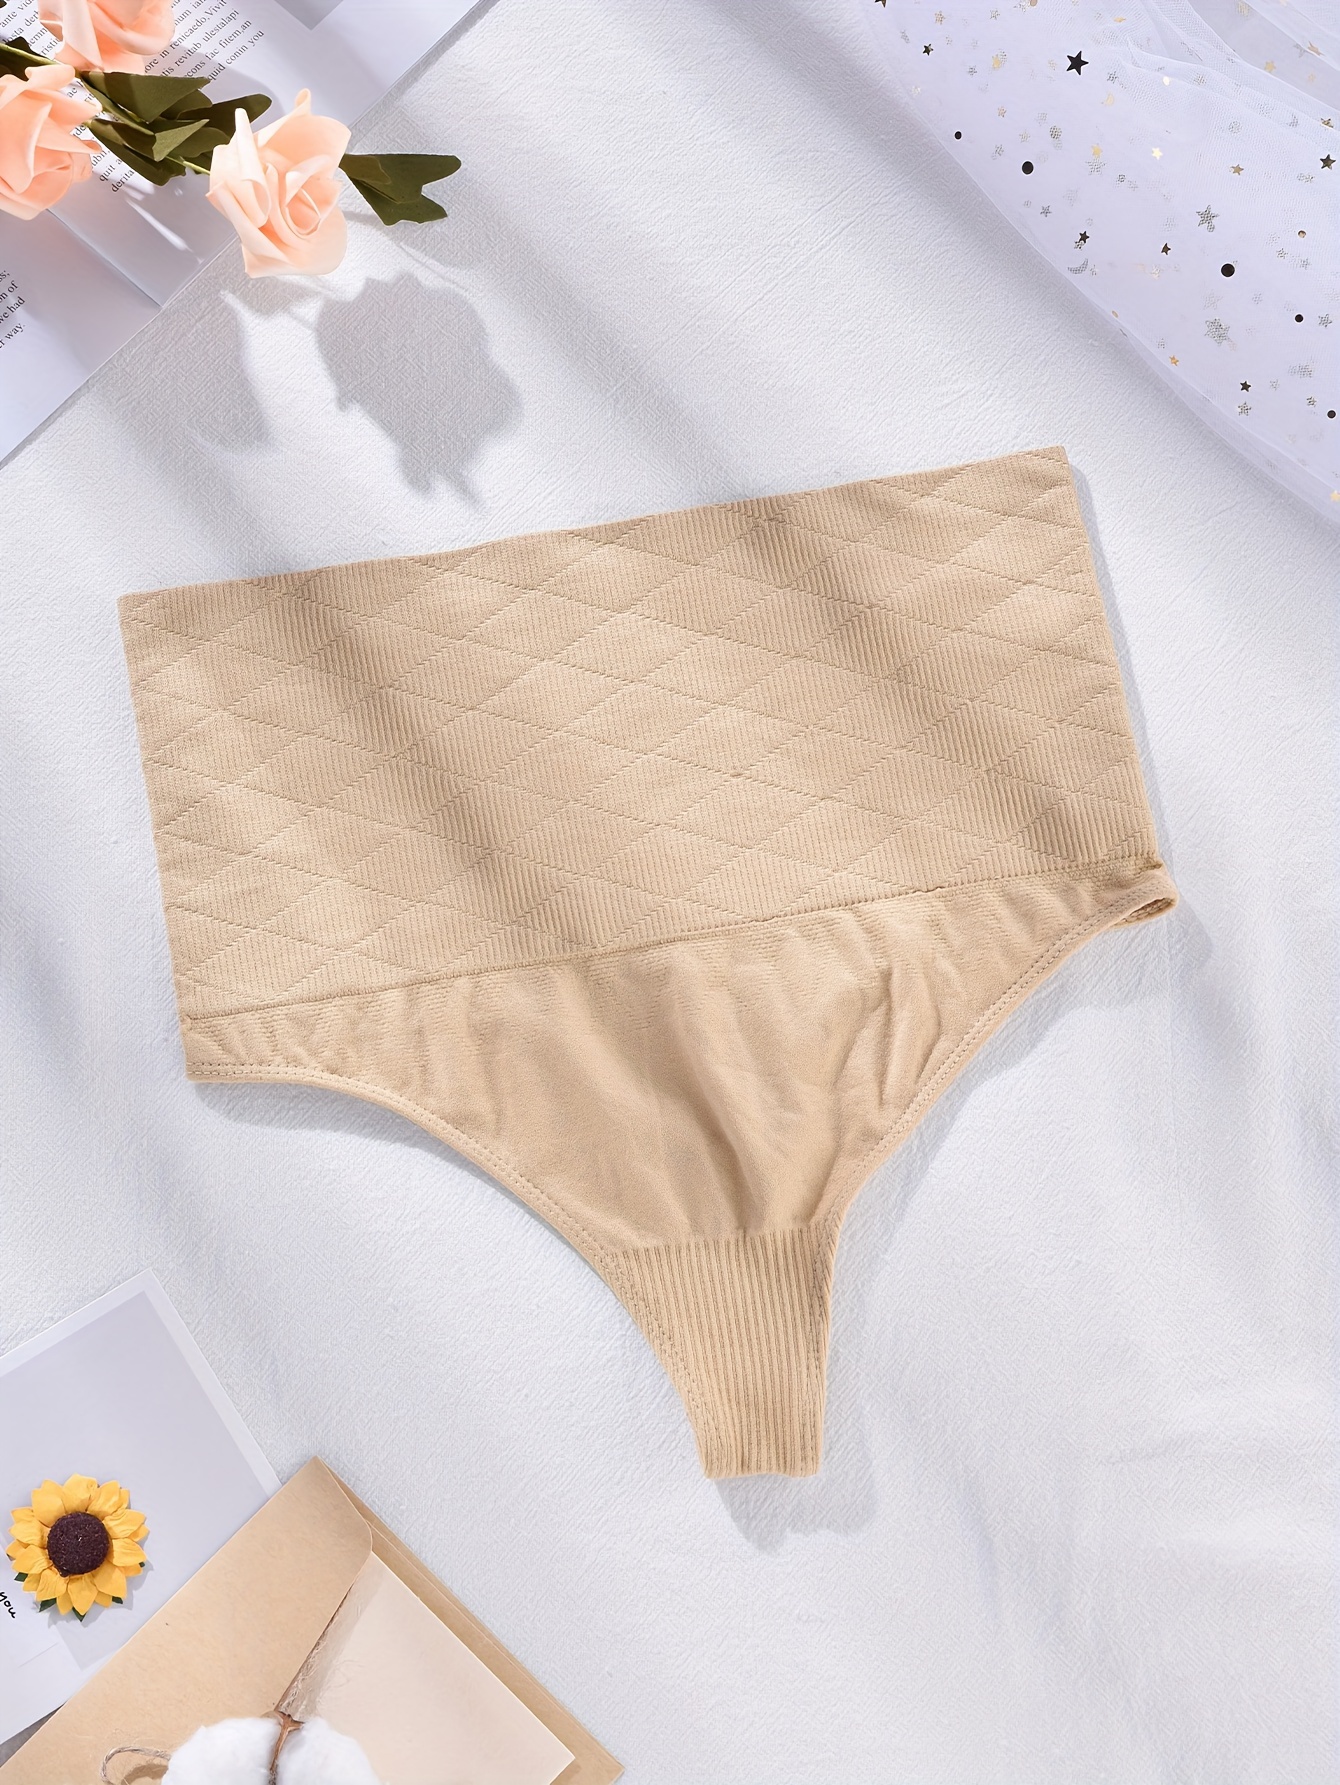 Spanx Women's Cotton Control Thong Panties